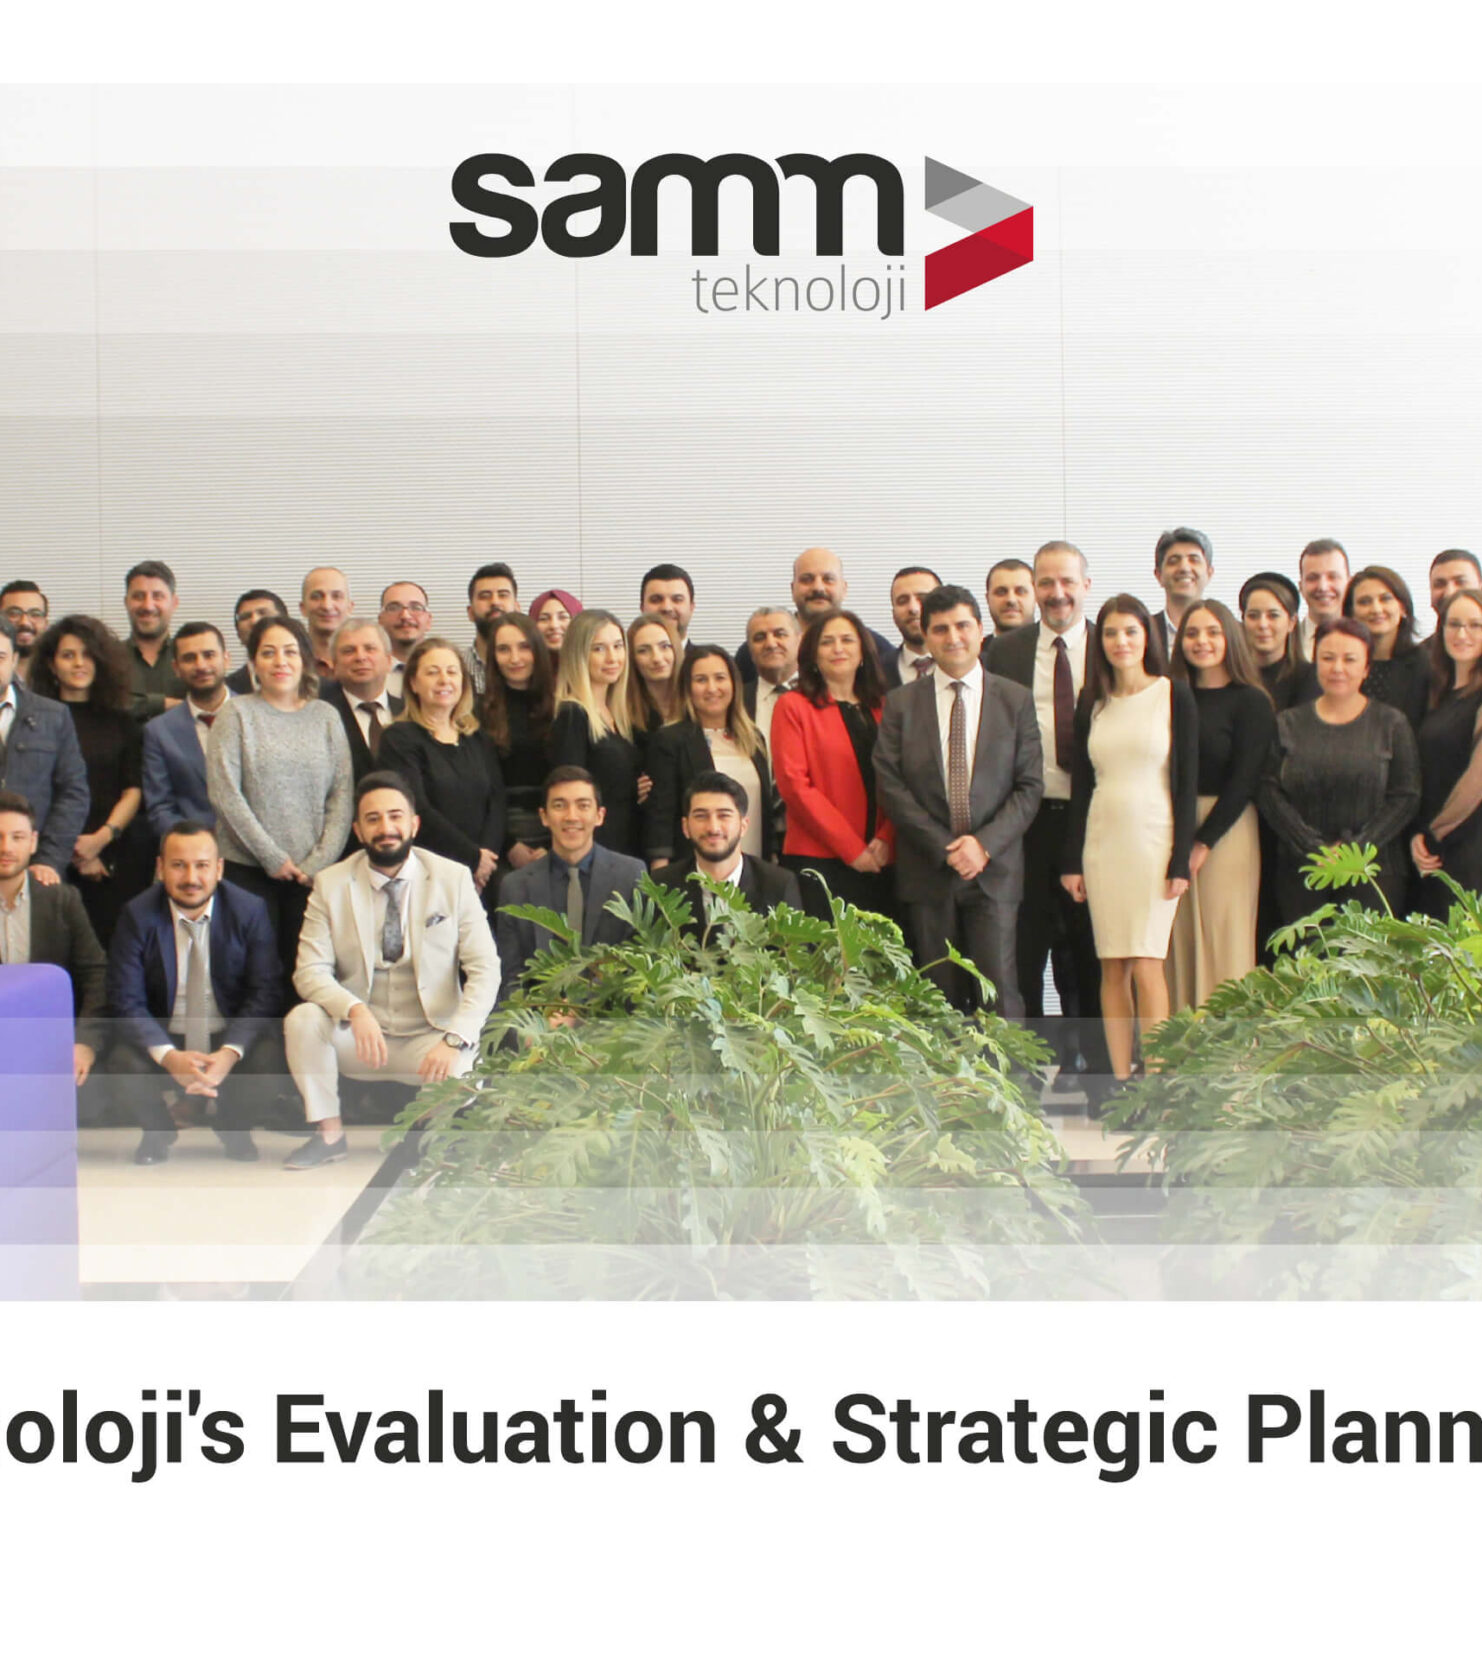 SAMM Teknoloji's Evaluation & Strategic Planning Meeting